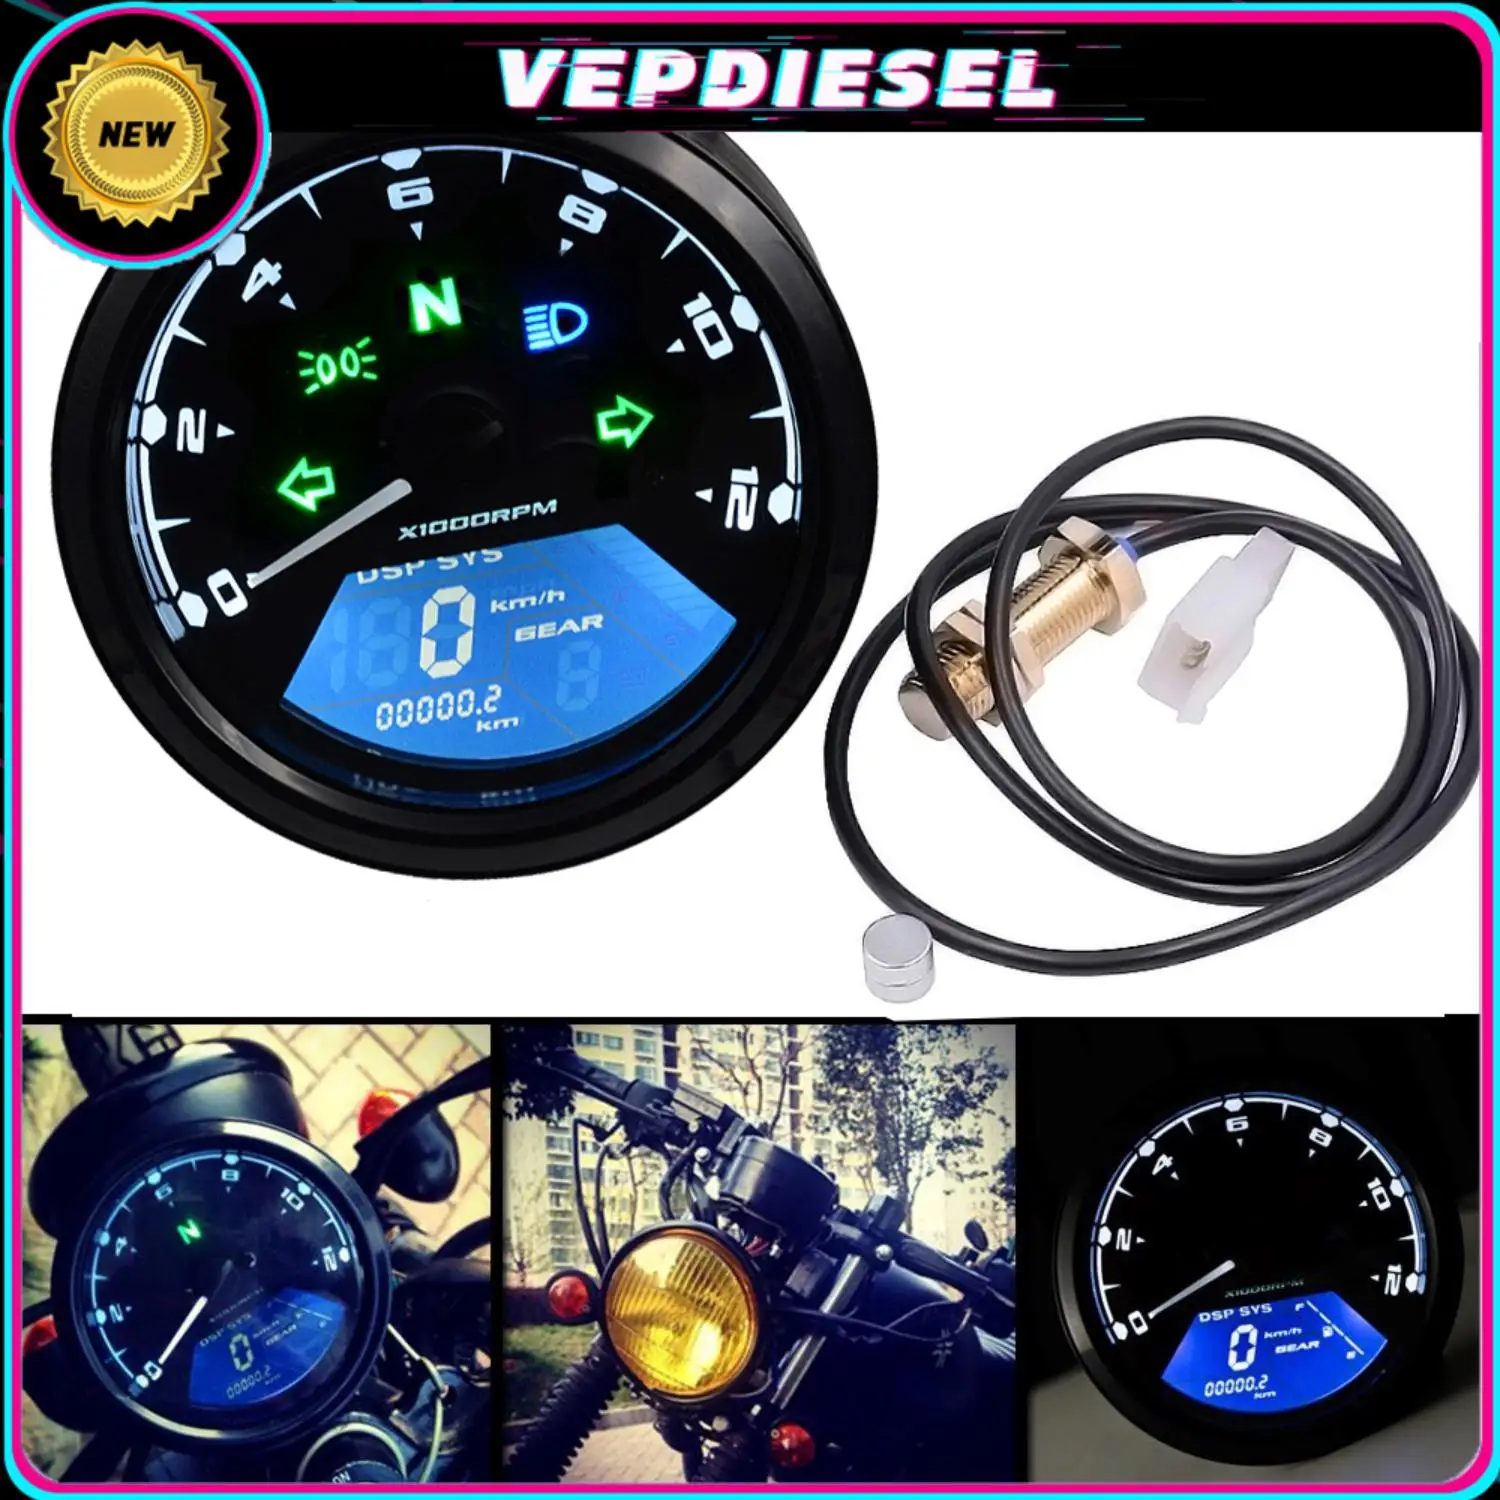 

New Universal LED Digital Motorcycle Speedometer Tachometer Odometer Gauge For 12V Motorcycle Electronic Meter